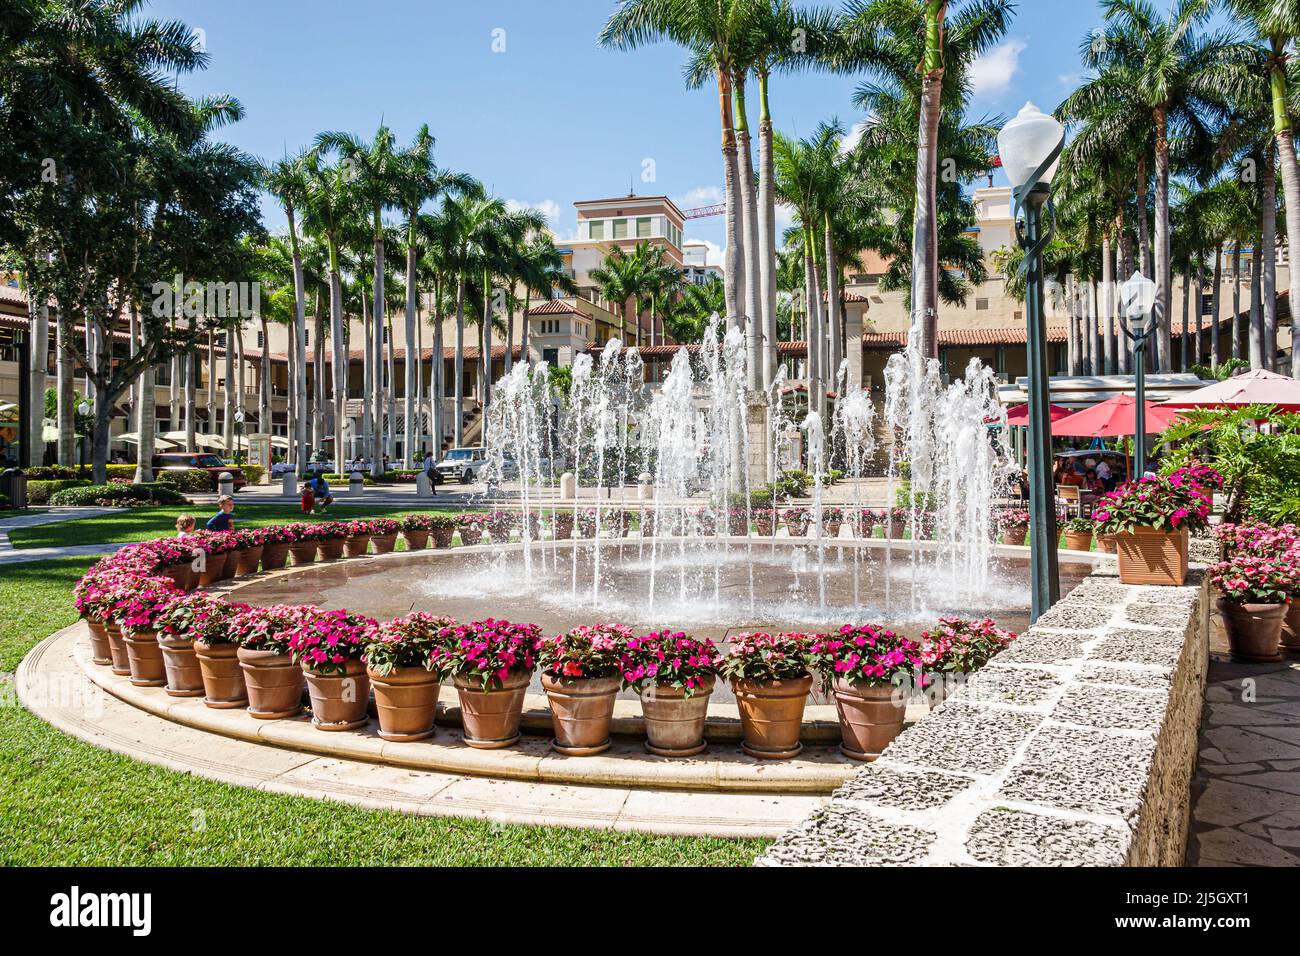 Miami Florida Coral Gables Shops im Merrick Park gehobenes Einkaufszentrum im Freien, Springbrunnen Stockfoto